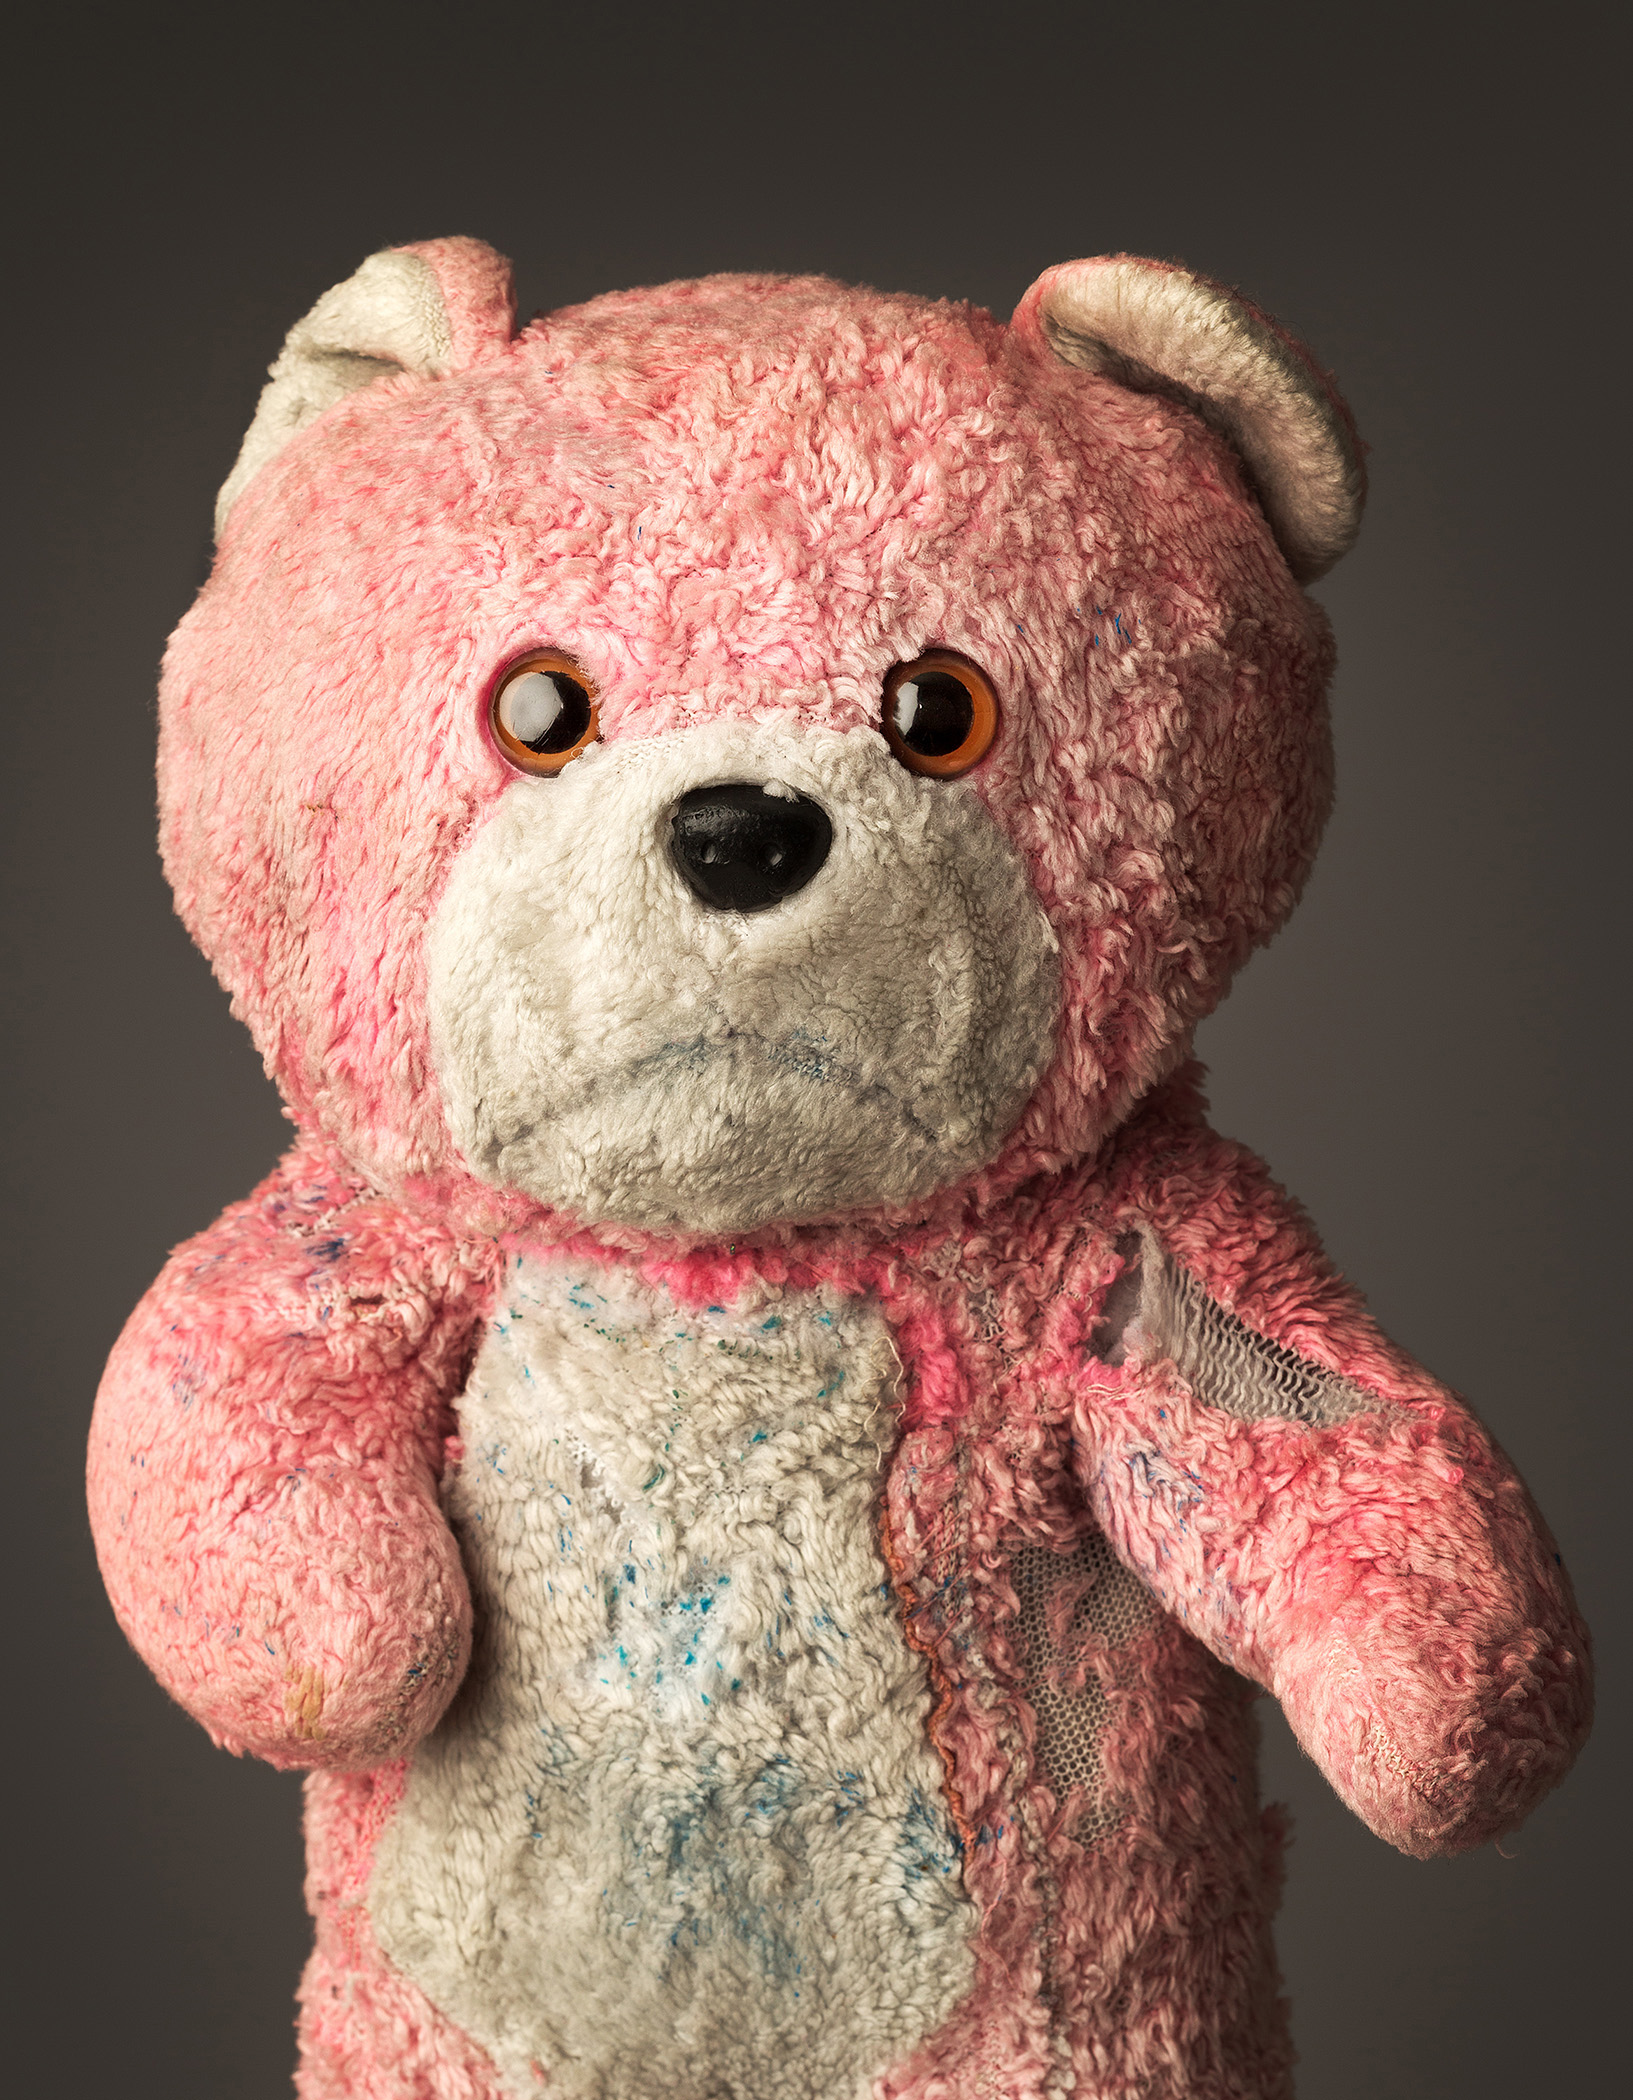 Well-worn pink teddy bear